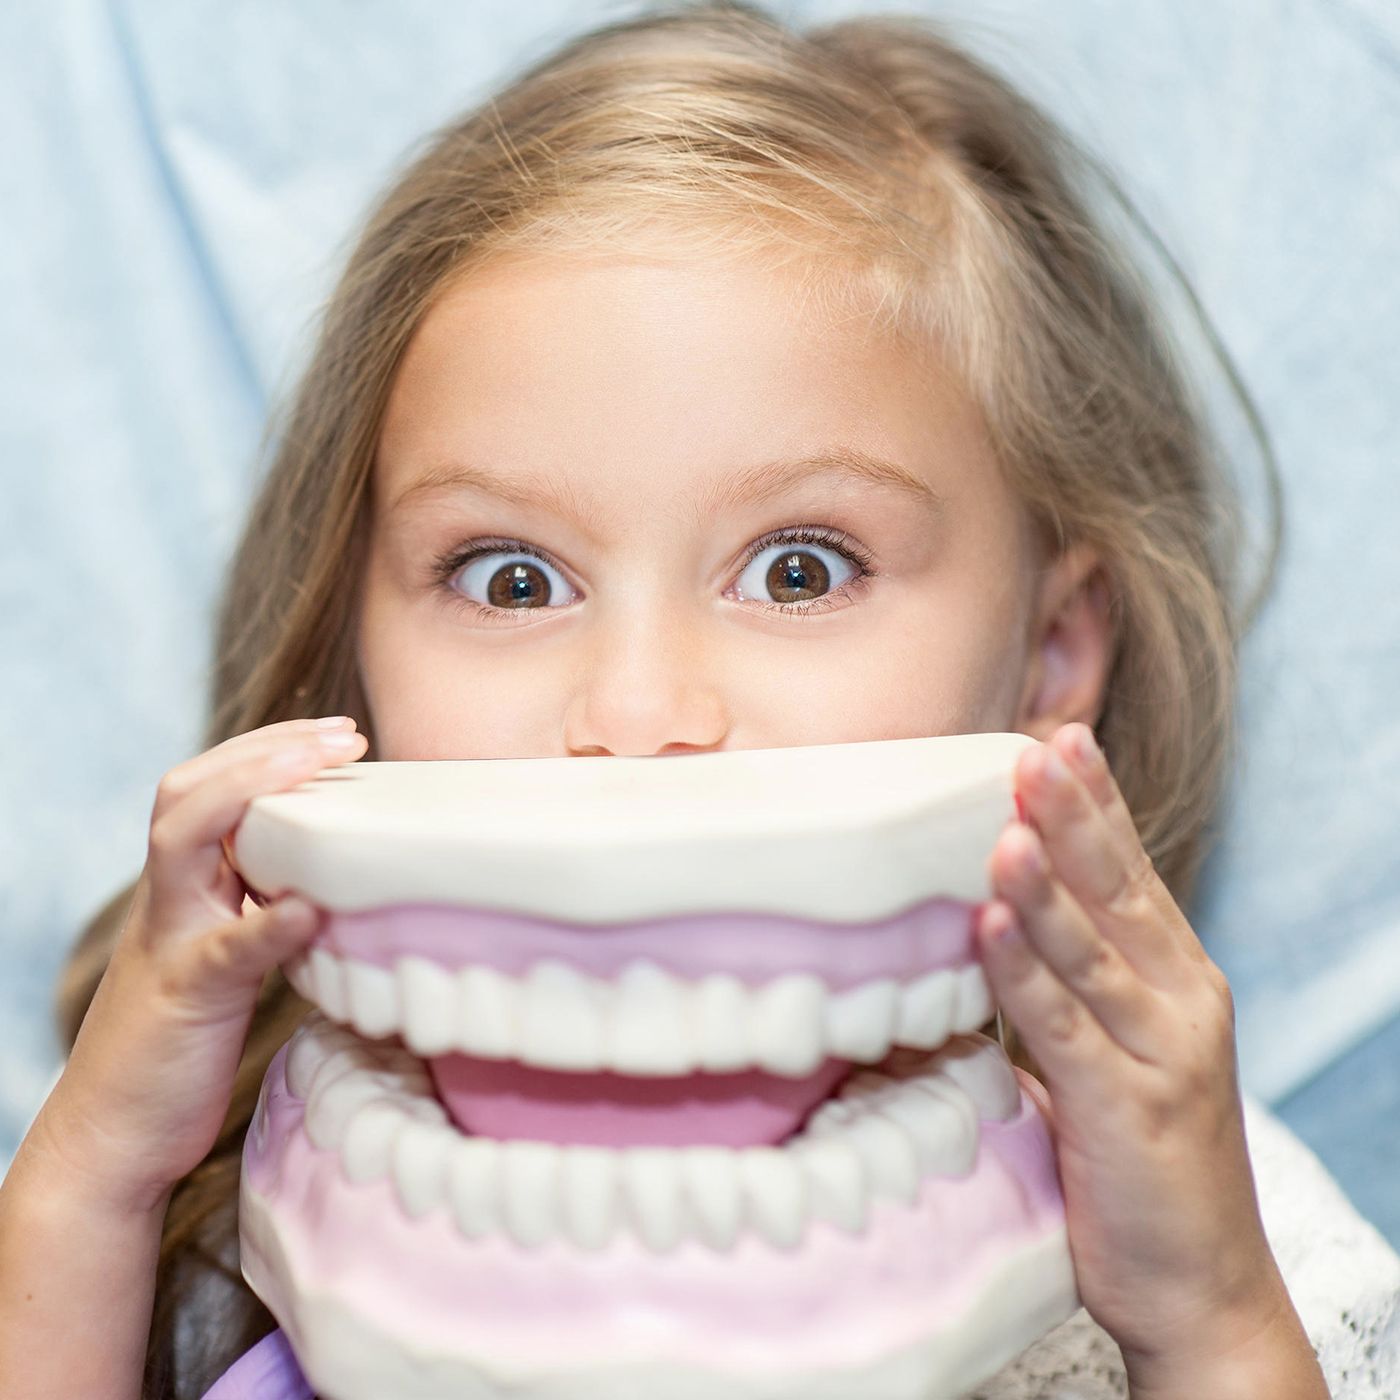 causes-of-periodontal-disease-1